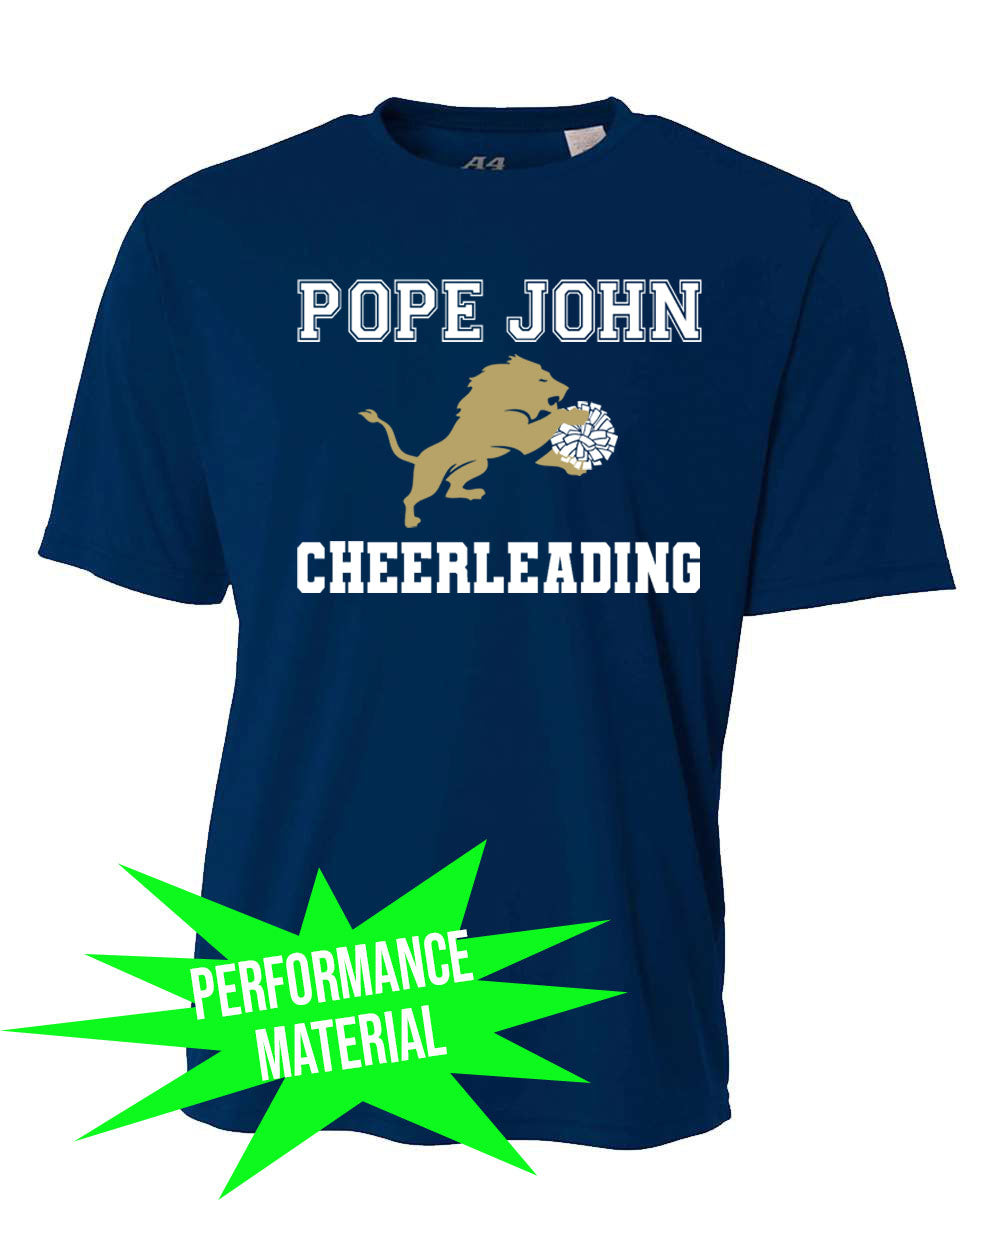 Pope John Cheer Performance Material design 1 T-Shirt